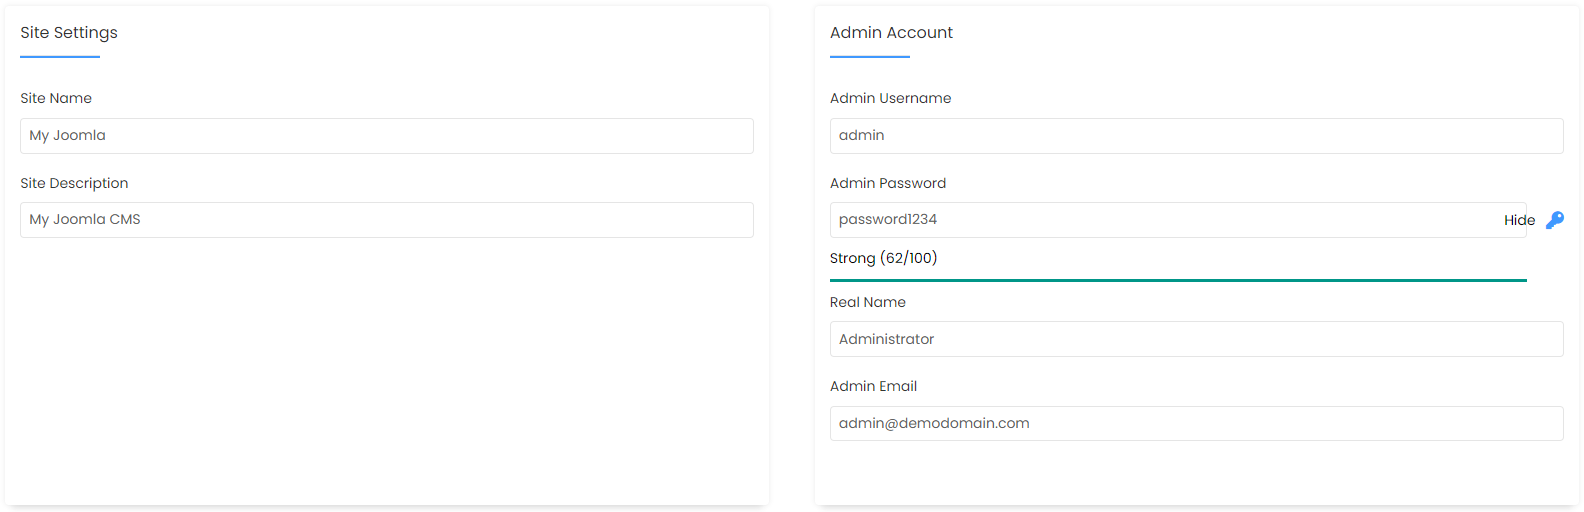 site_settings_admin_account_joomla.png